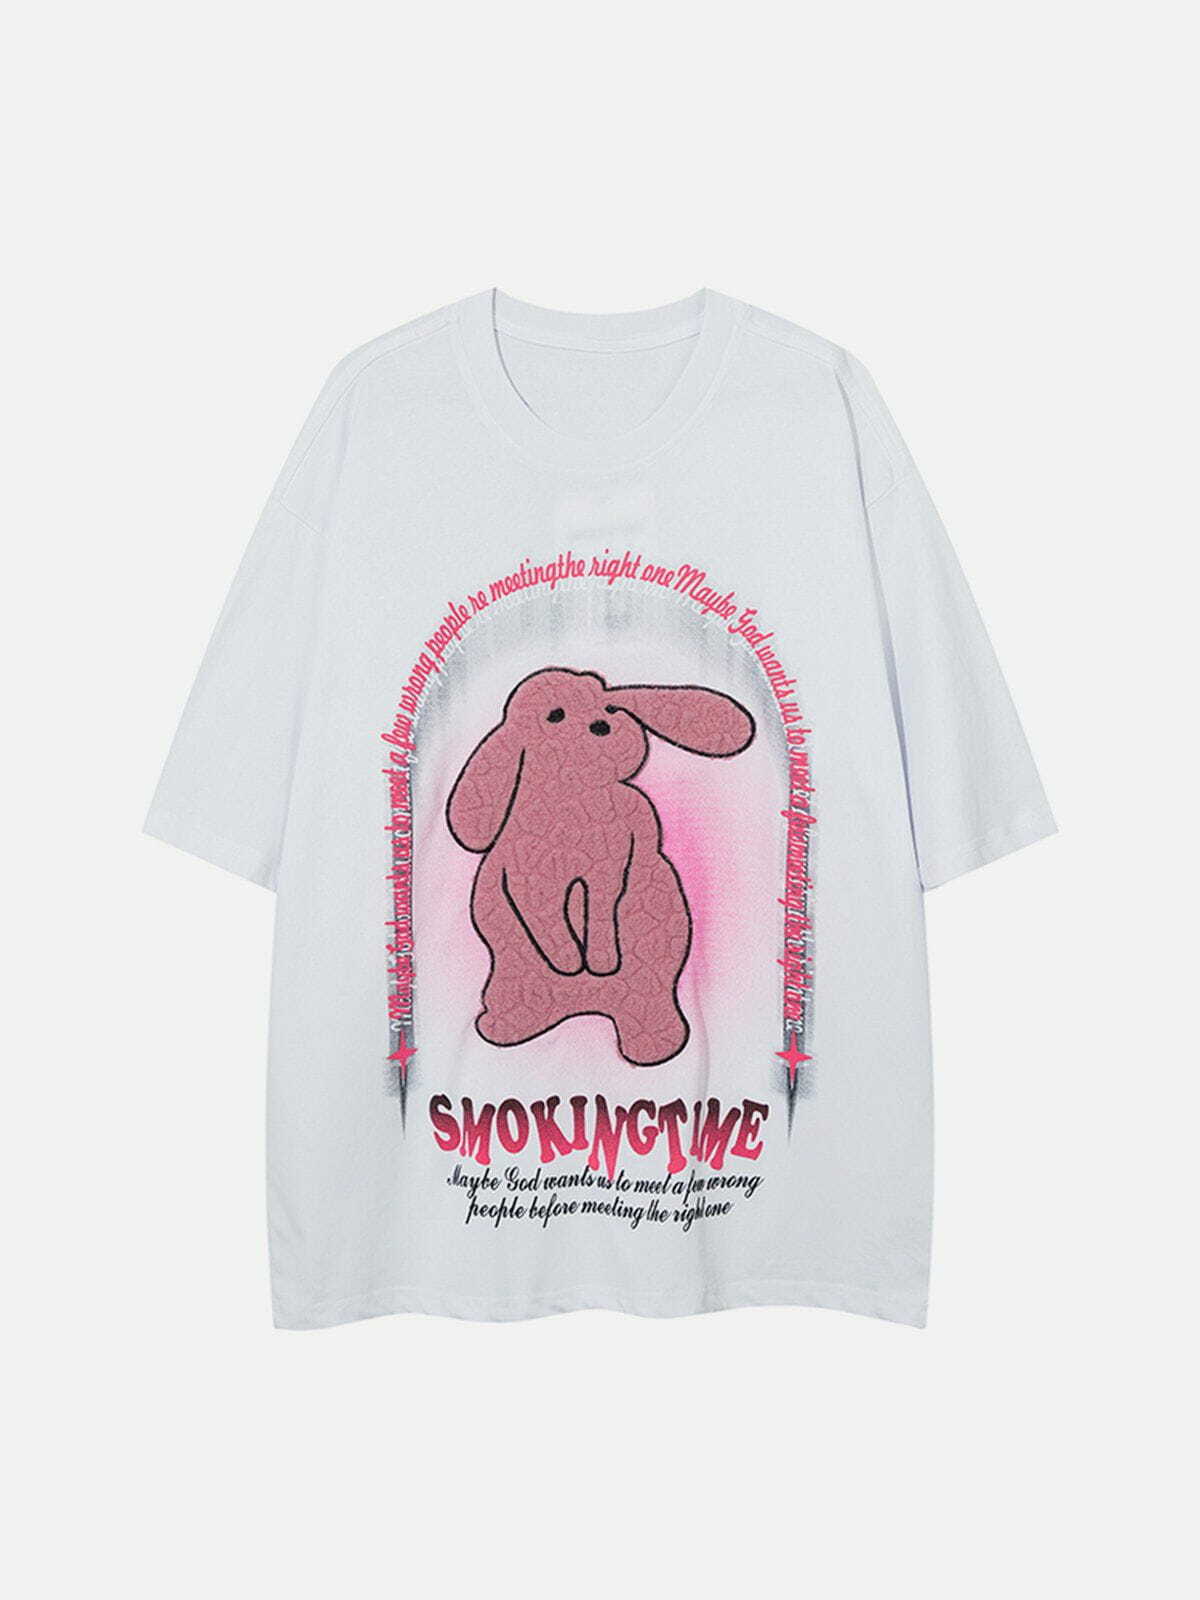 retro rabbit print tee edgy  vibrant streetwear fashion 6430